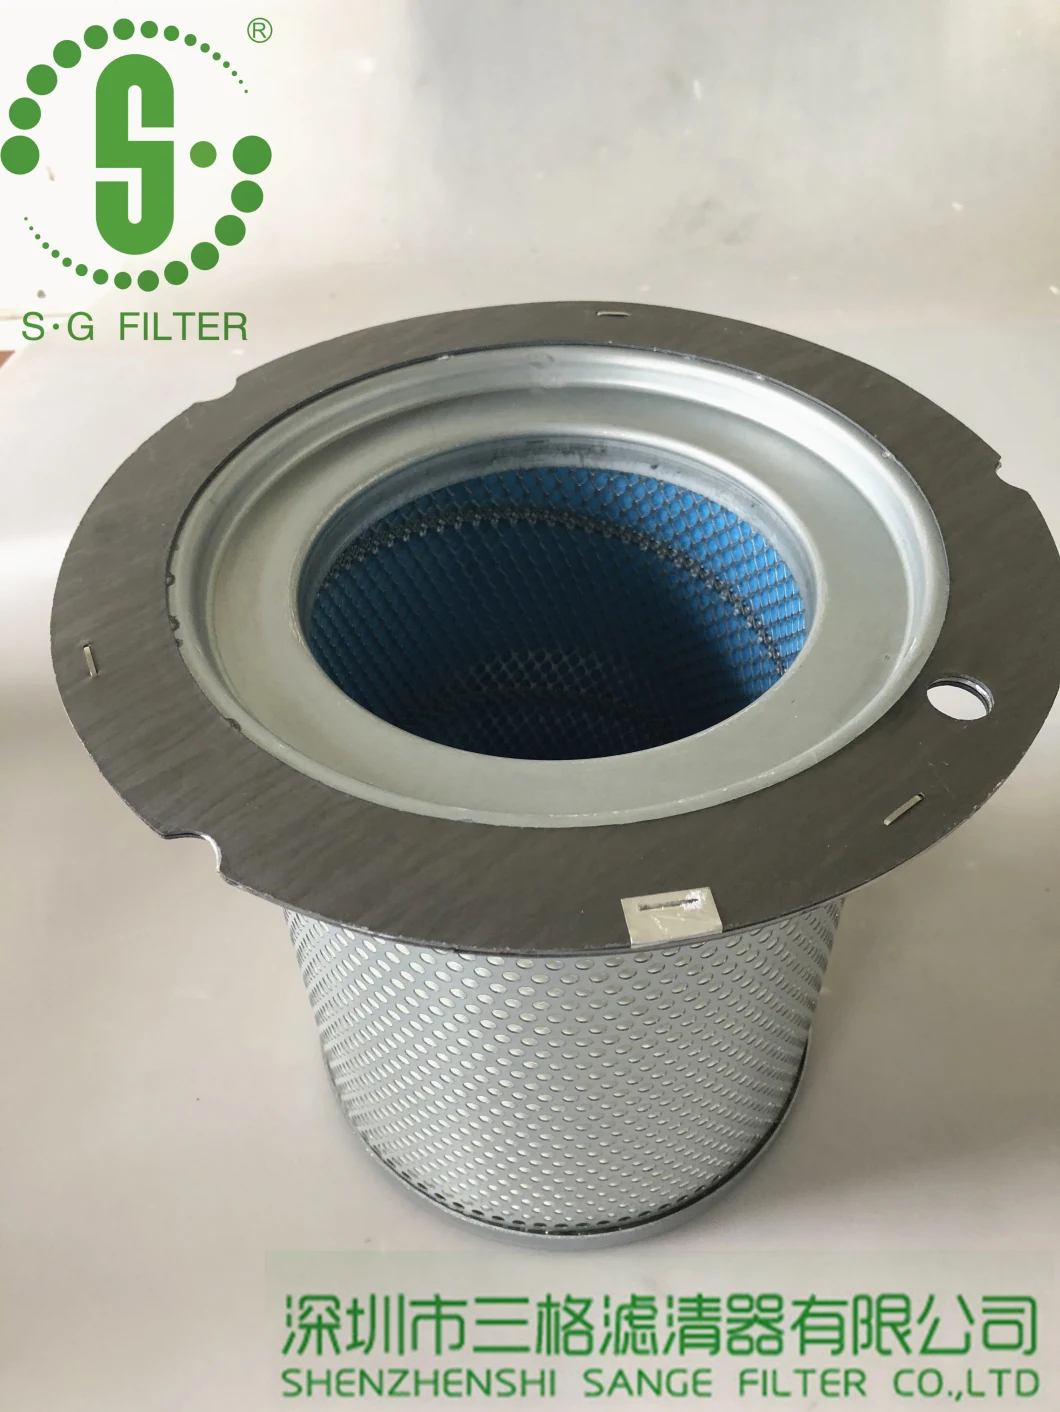 Best Quality Replacement Jugar 30HP Air Compressor Filter Part Air Oil Separator 537704312100 1625725300 2901920040